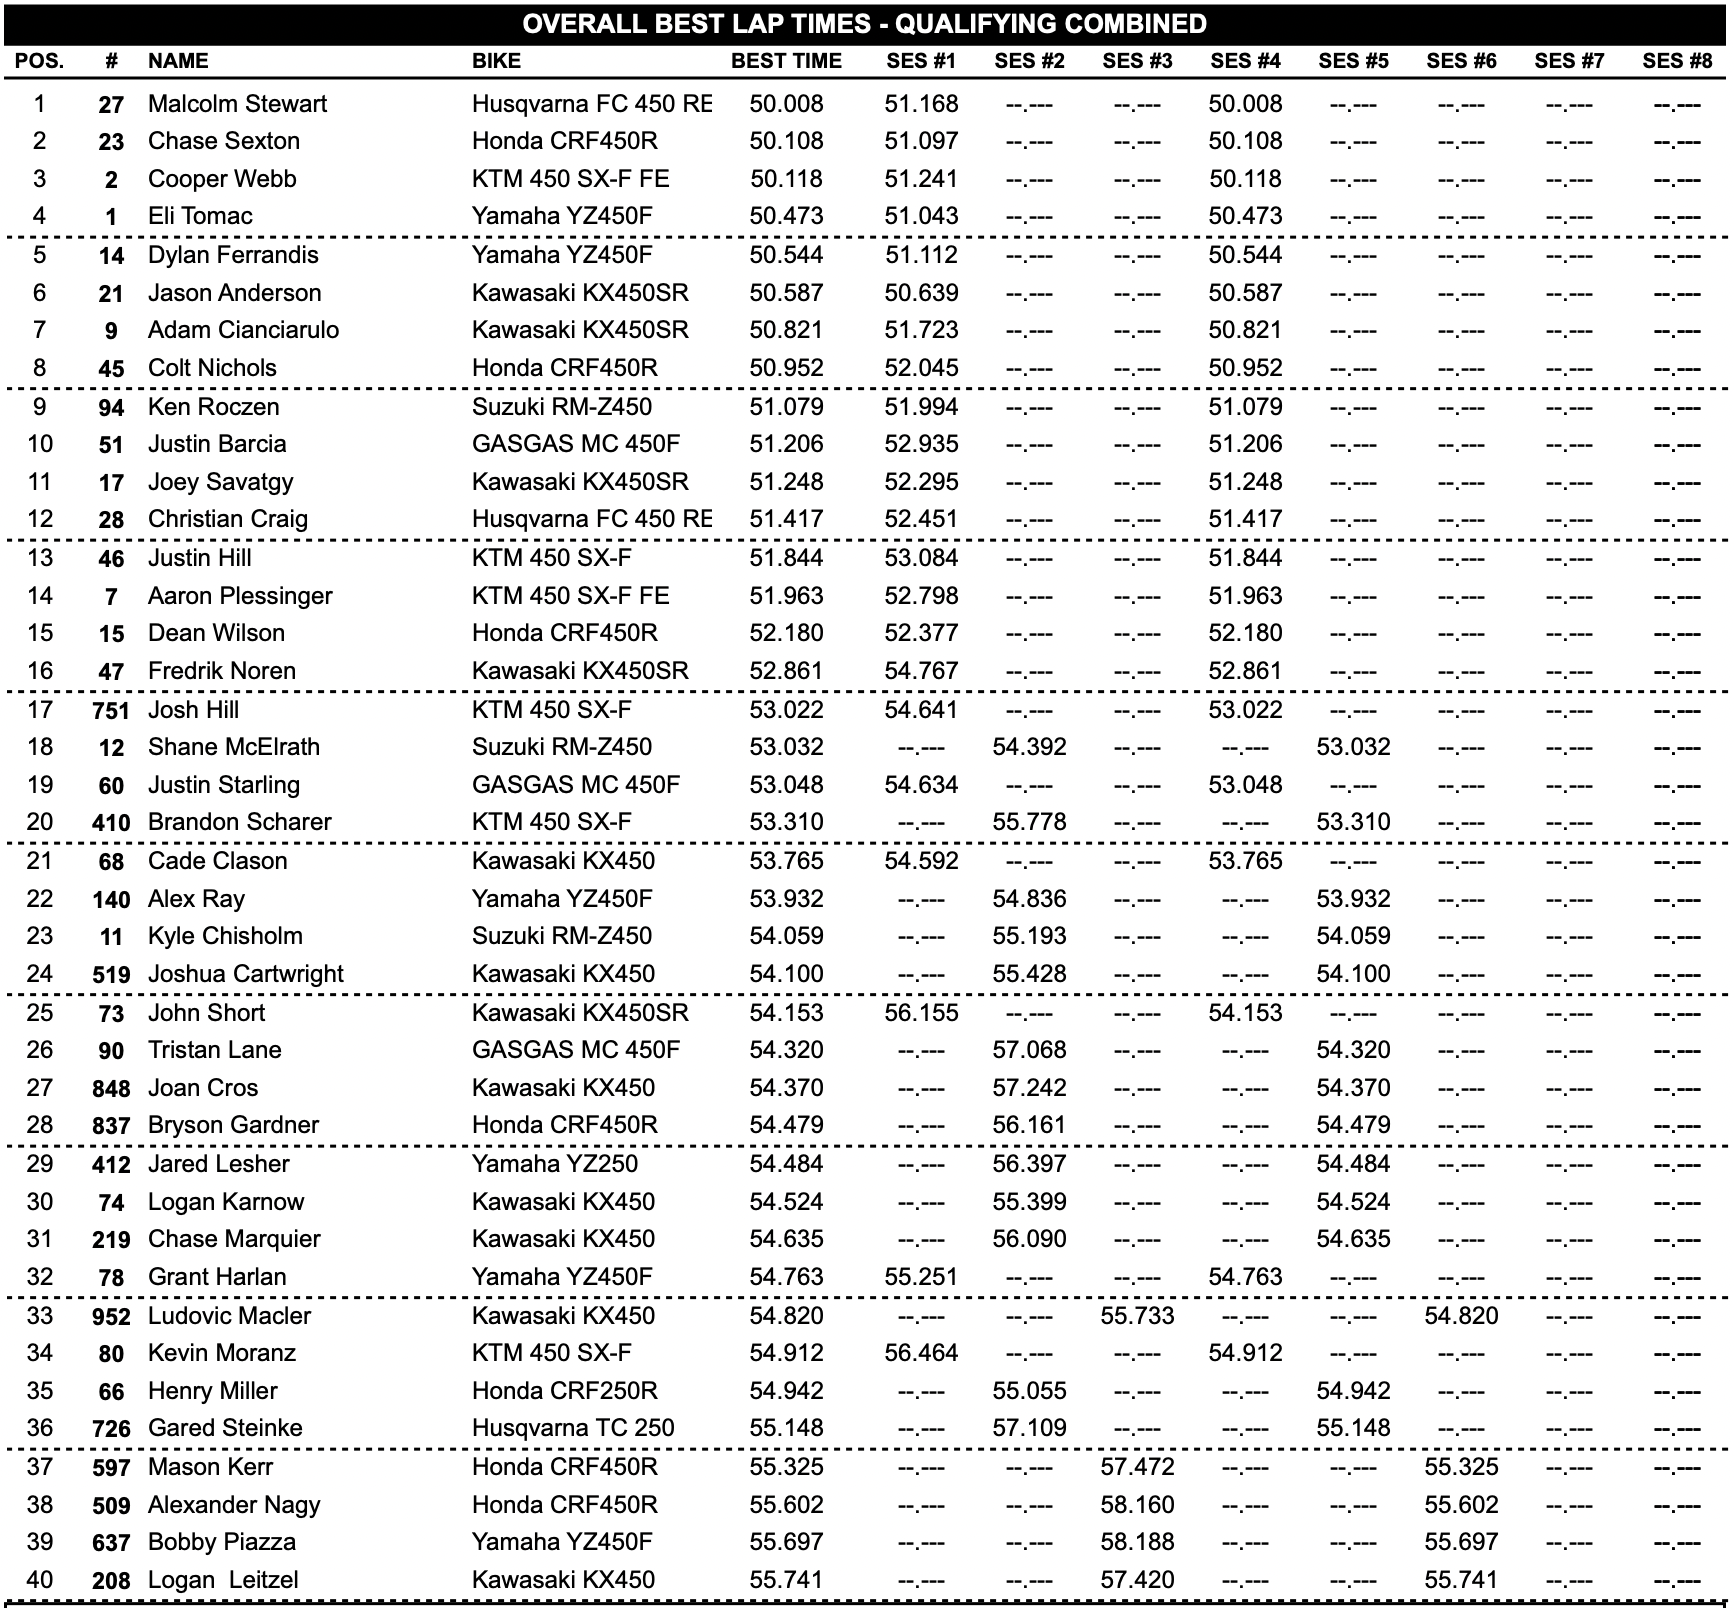 2023 AMA SX Sand Diego - 450SX Qualifying Results